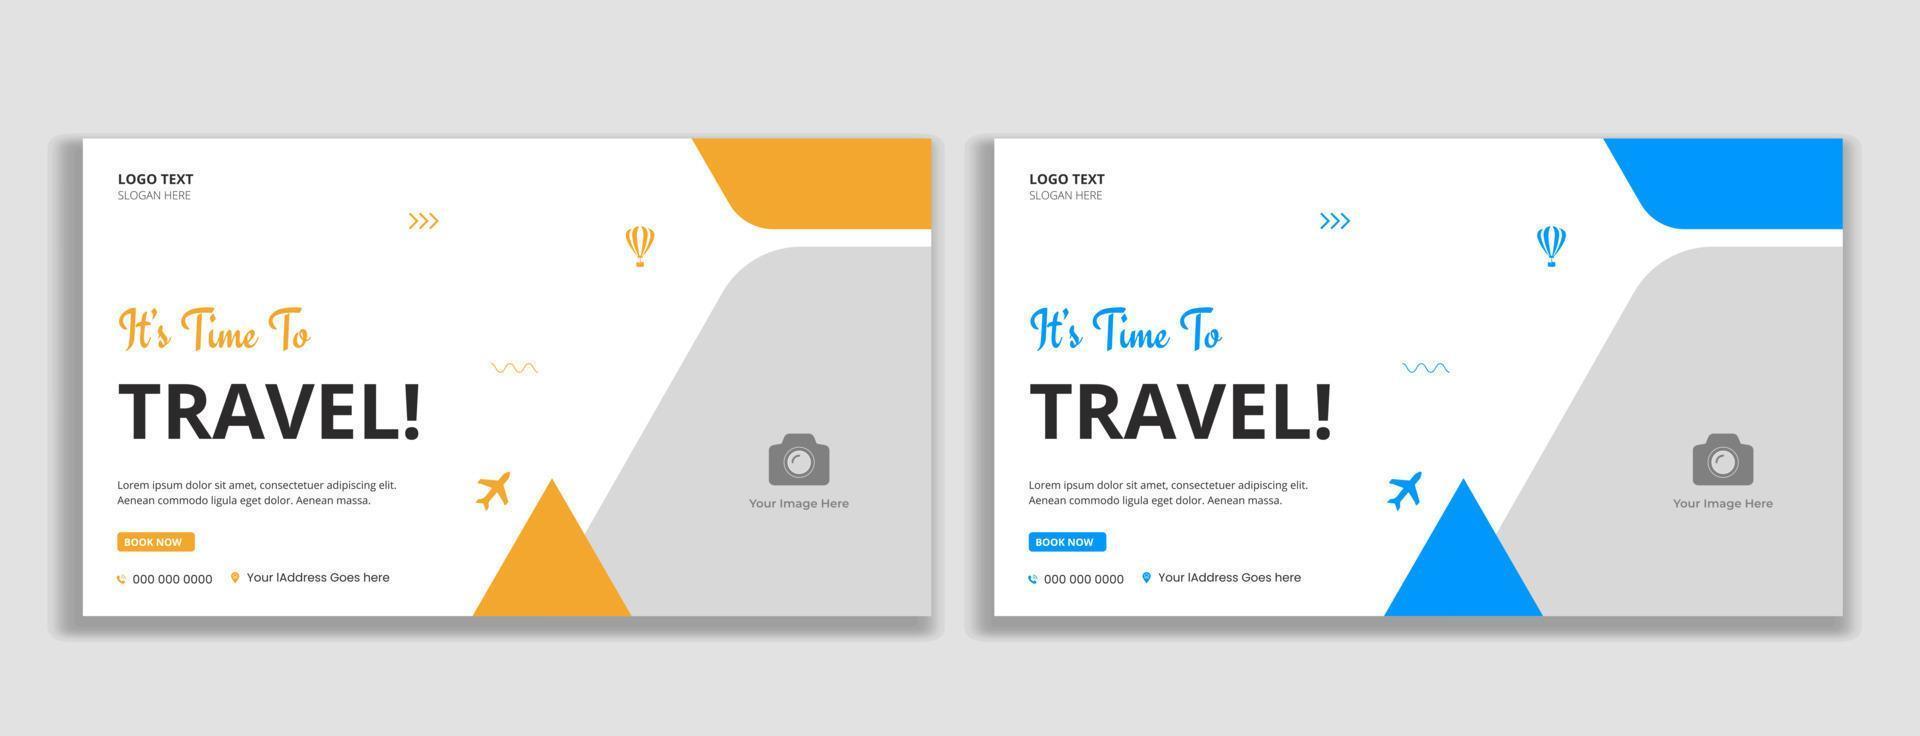 Travel Agency Thumbnail And Social Media Post Banner Template vector